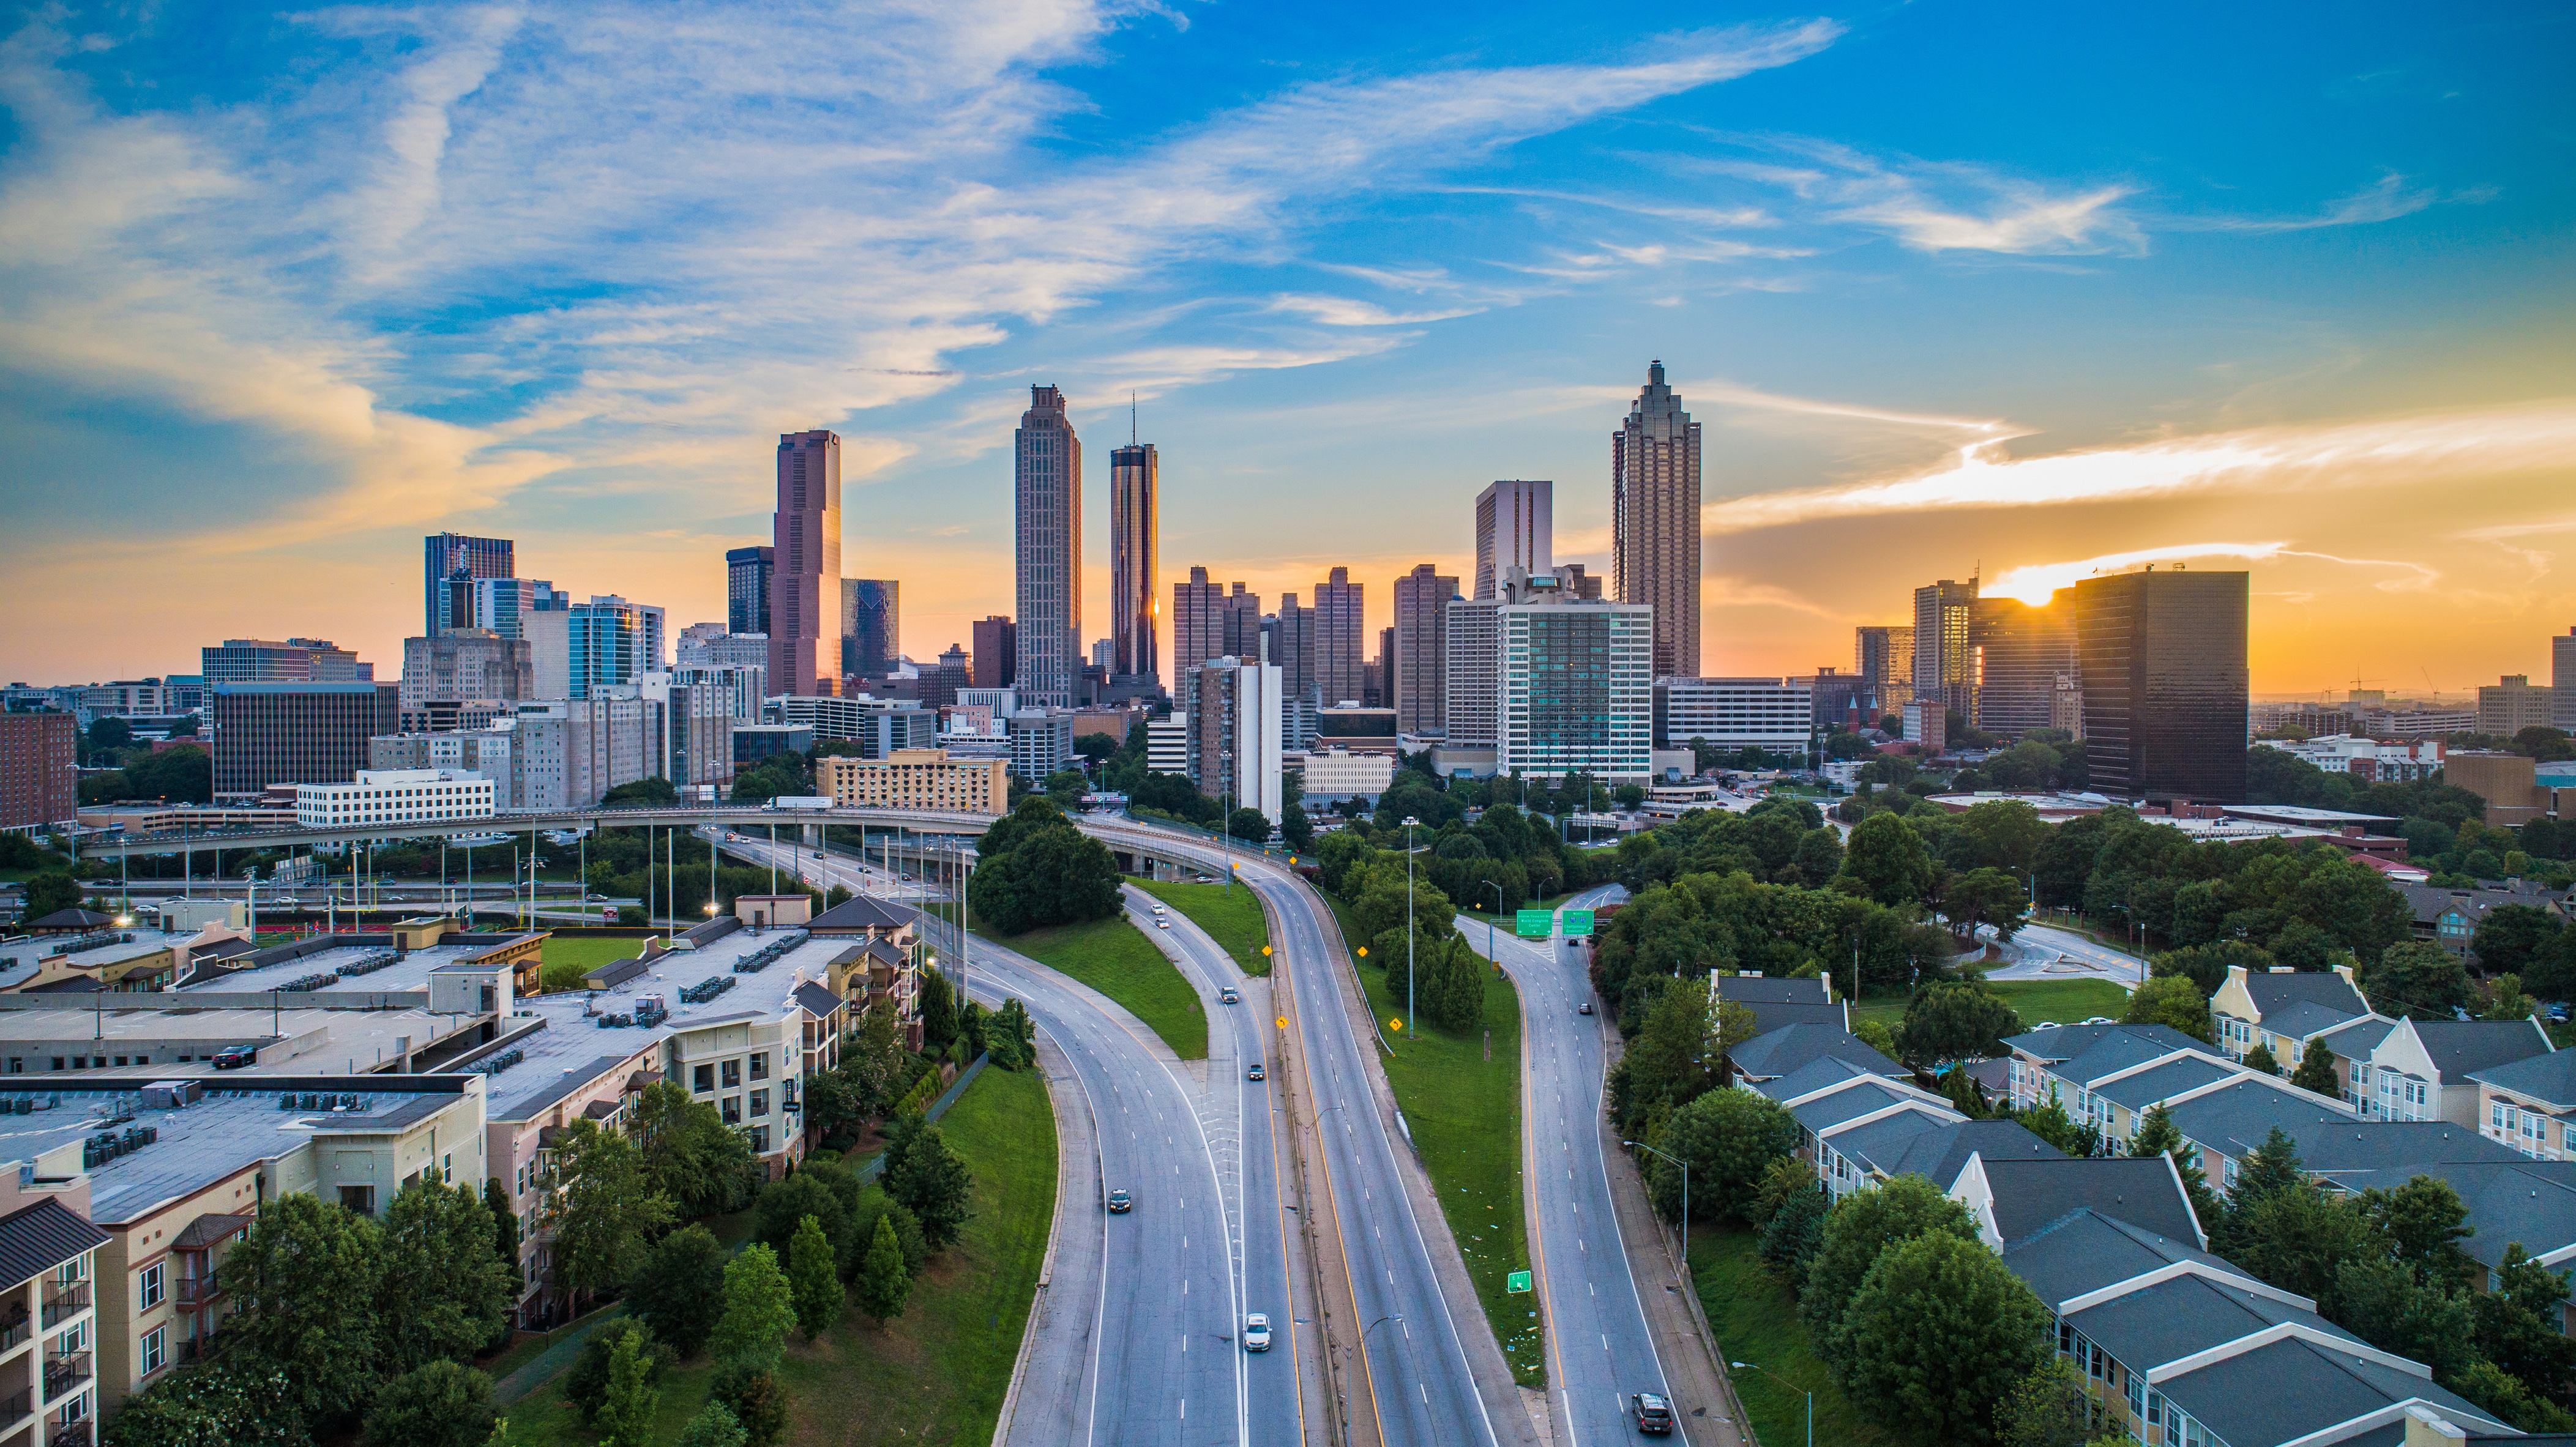 Skyline view of Atlanta